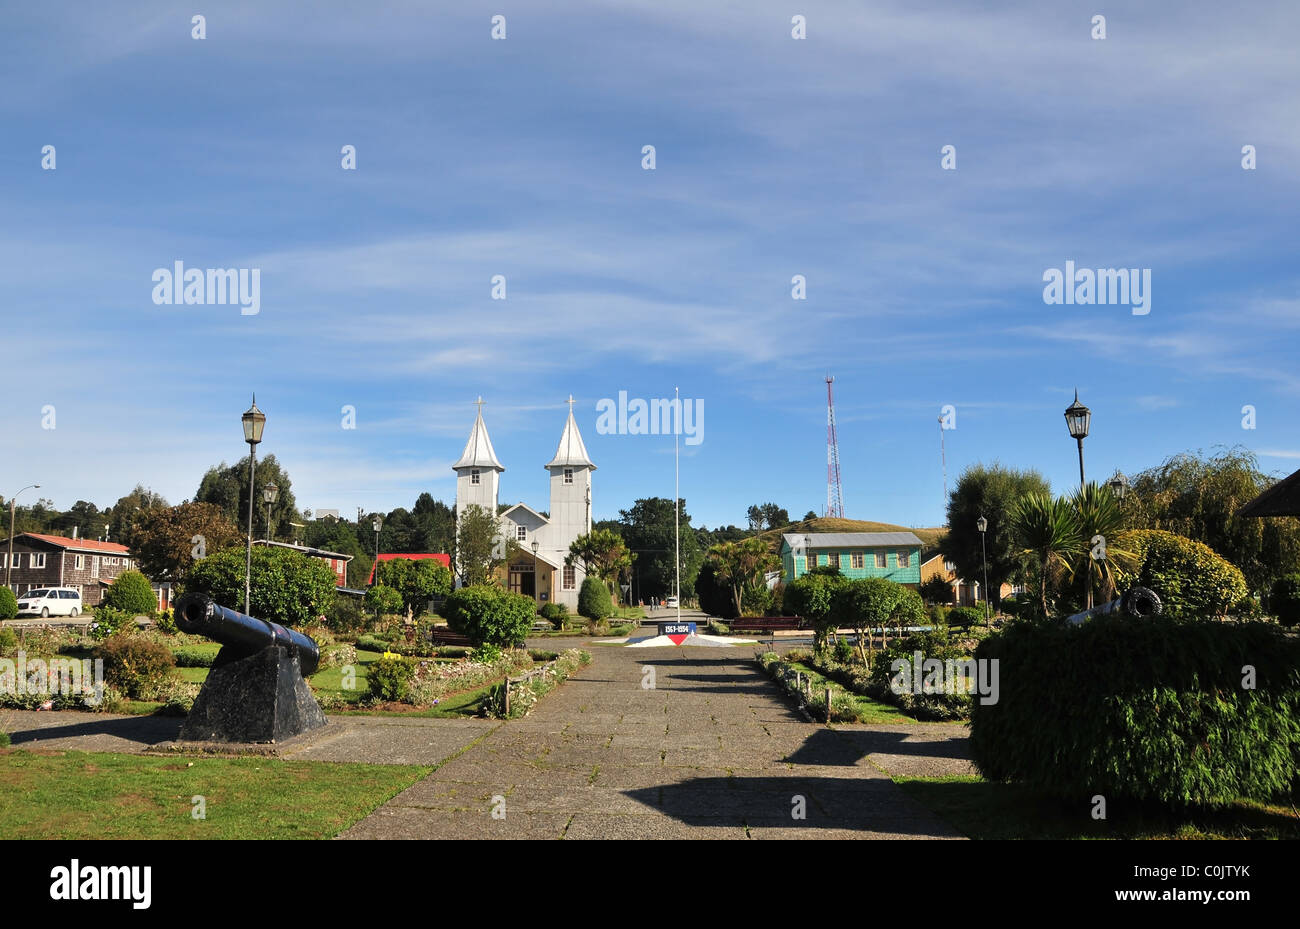 Blue sky view of silver metal church, black cannon and green garden plots, Plaza Martin Ruiz, Chacao, Chiloe Island, Chile Stock Photo